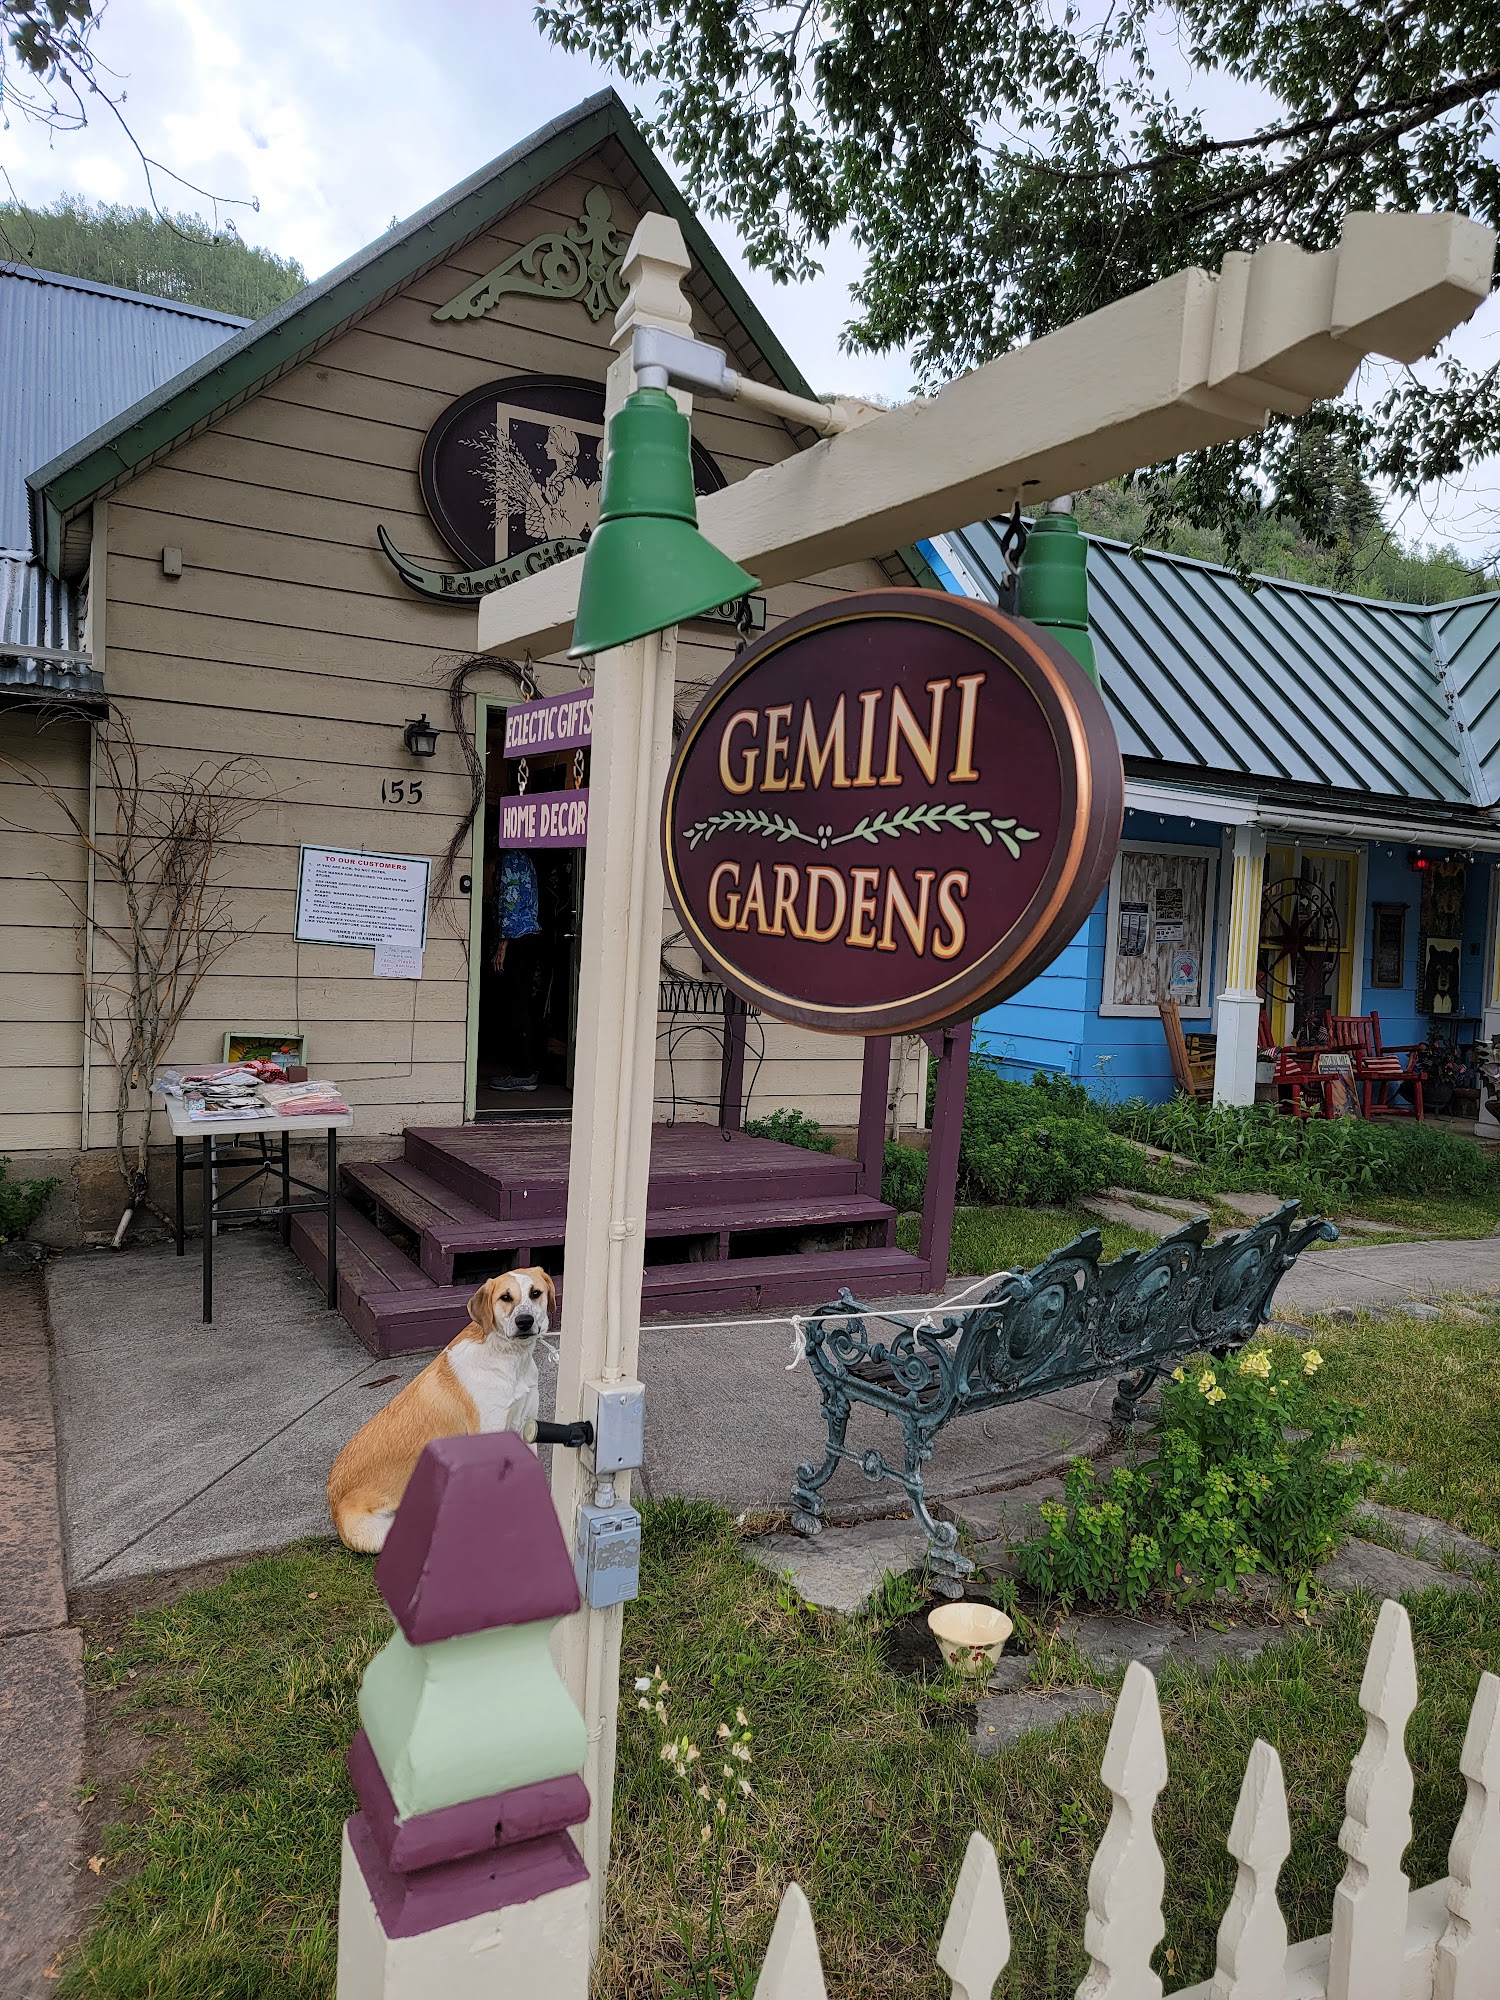 Gemini Gardens Inc 155 N Main St, Minturn Colorado 81645